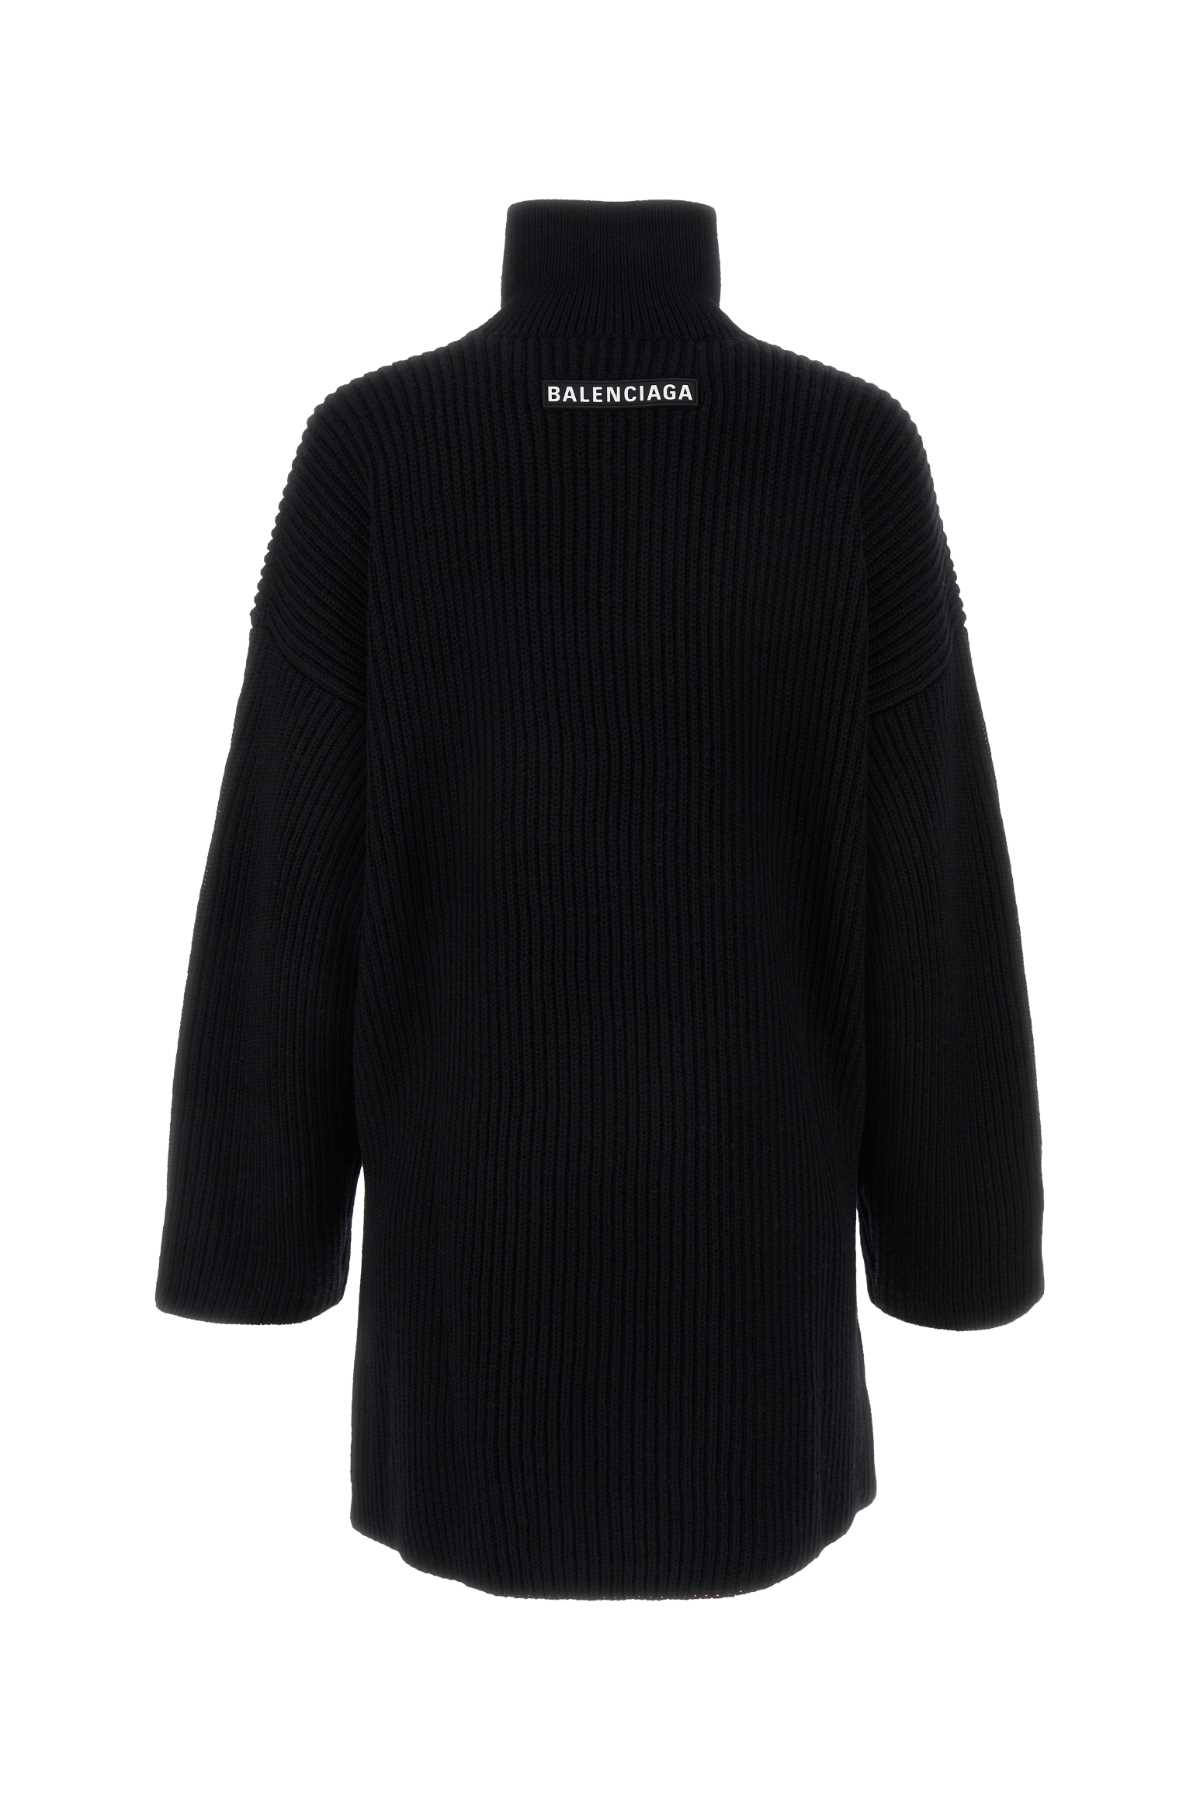 Shop Balenciaga Black Wool Oversize Sweater